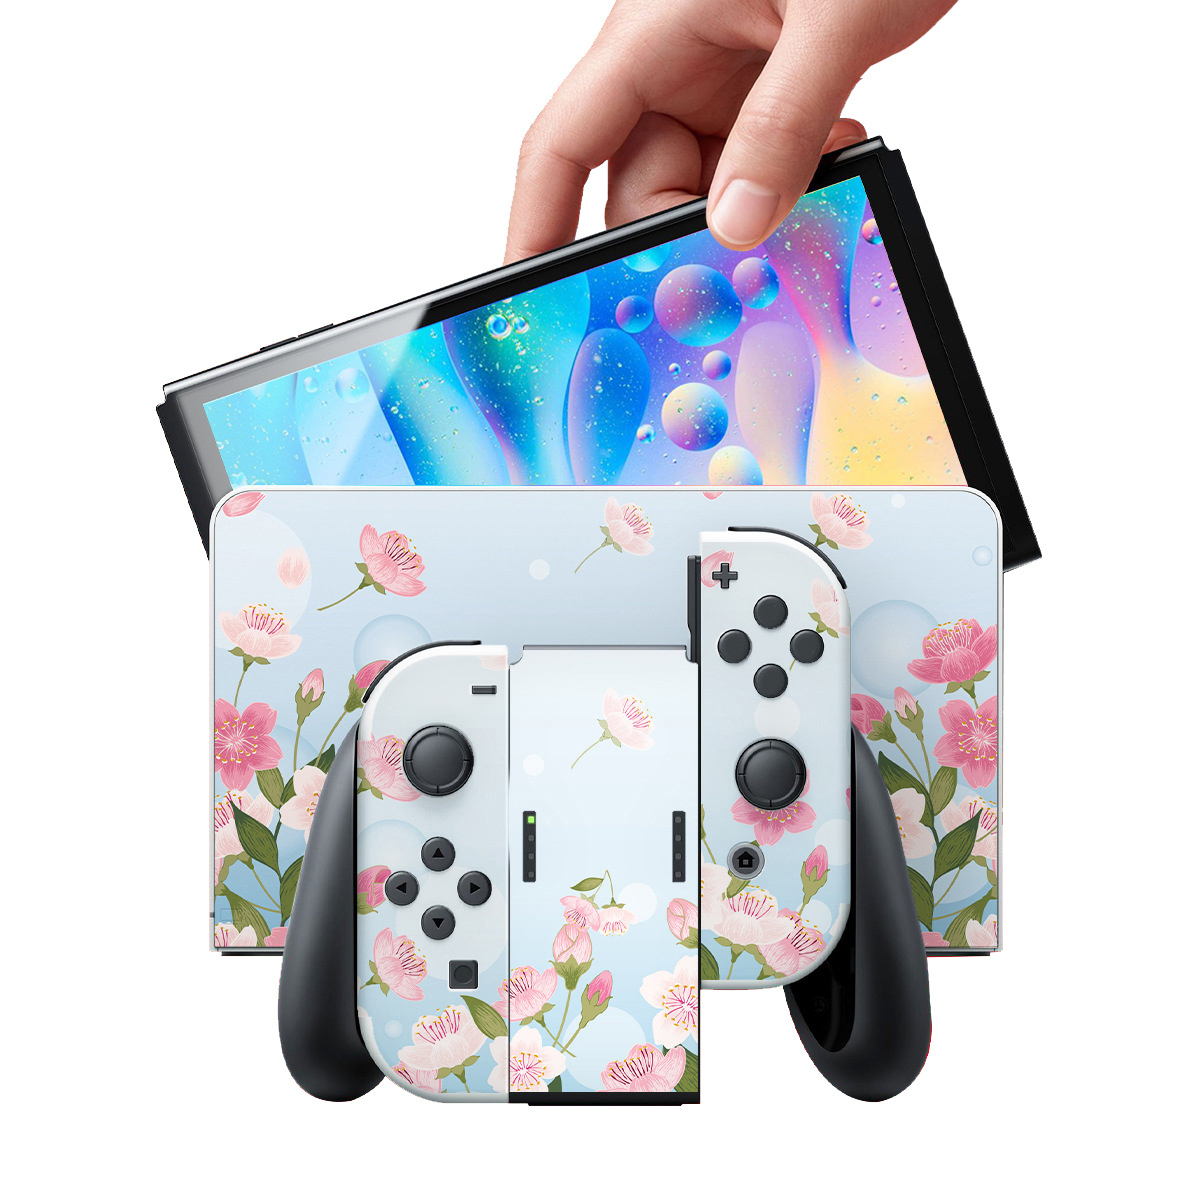 Lotus Flowers Premium 3M Skins Set for Nintendo Switch